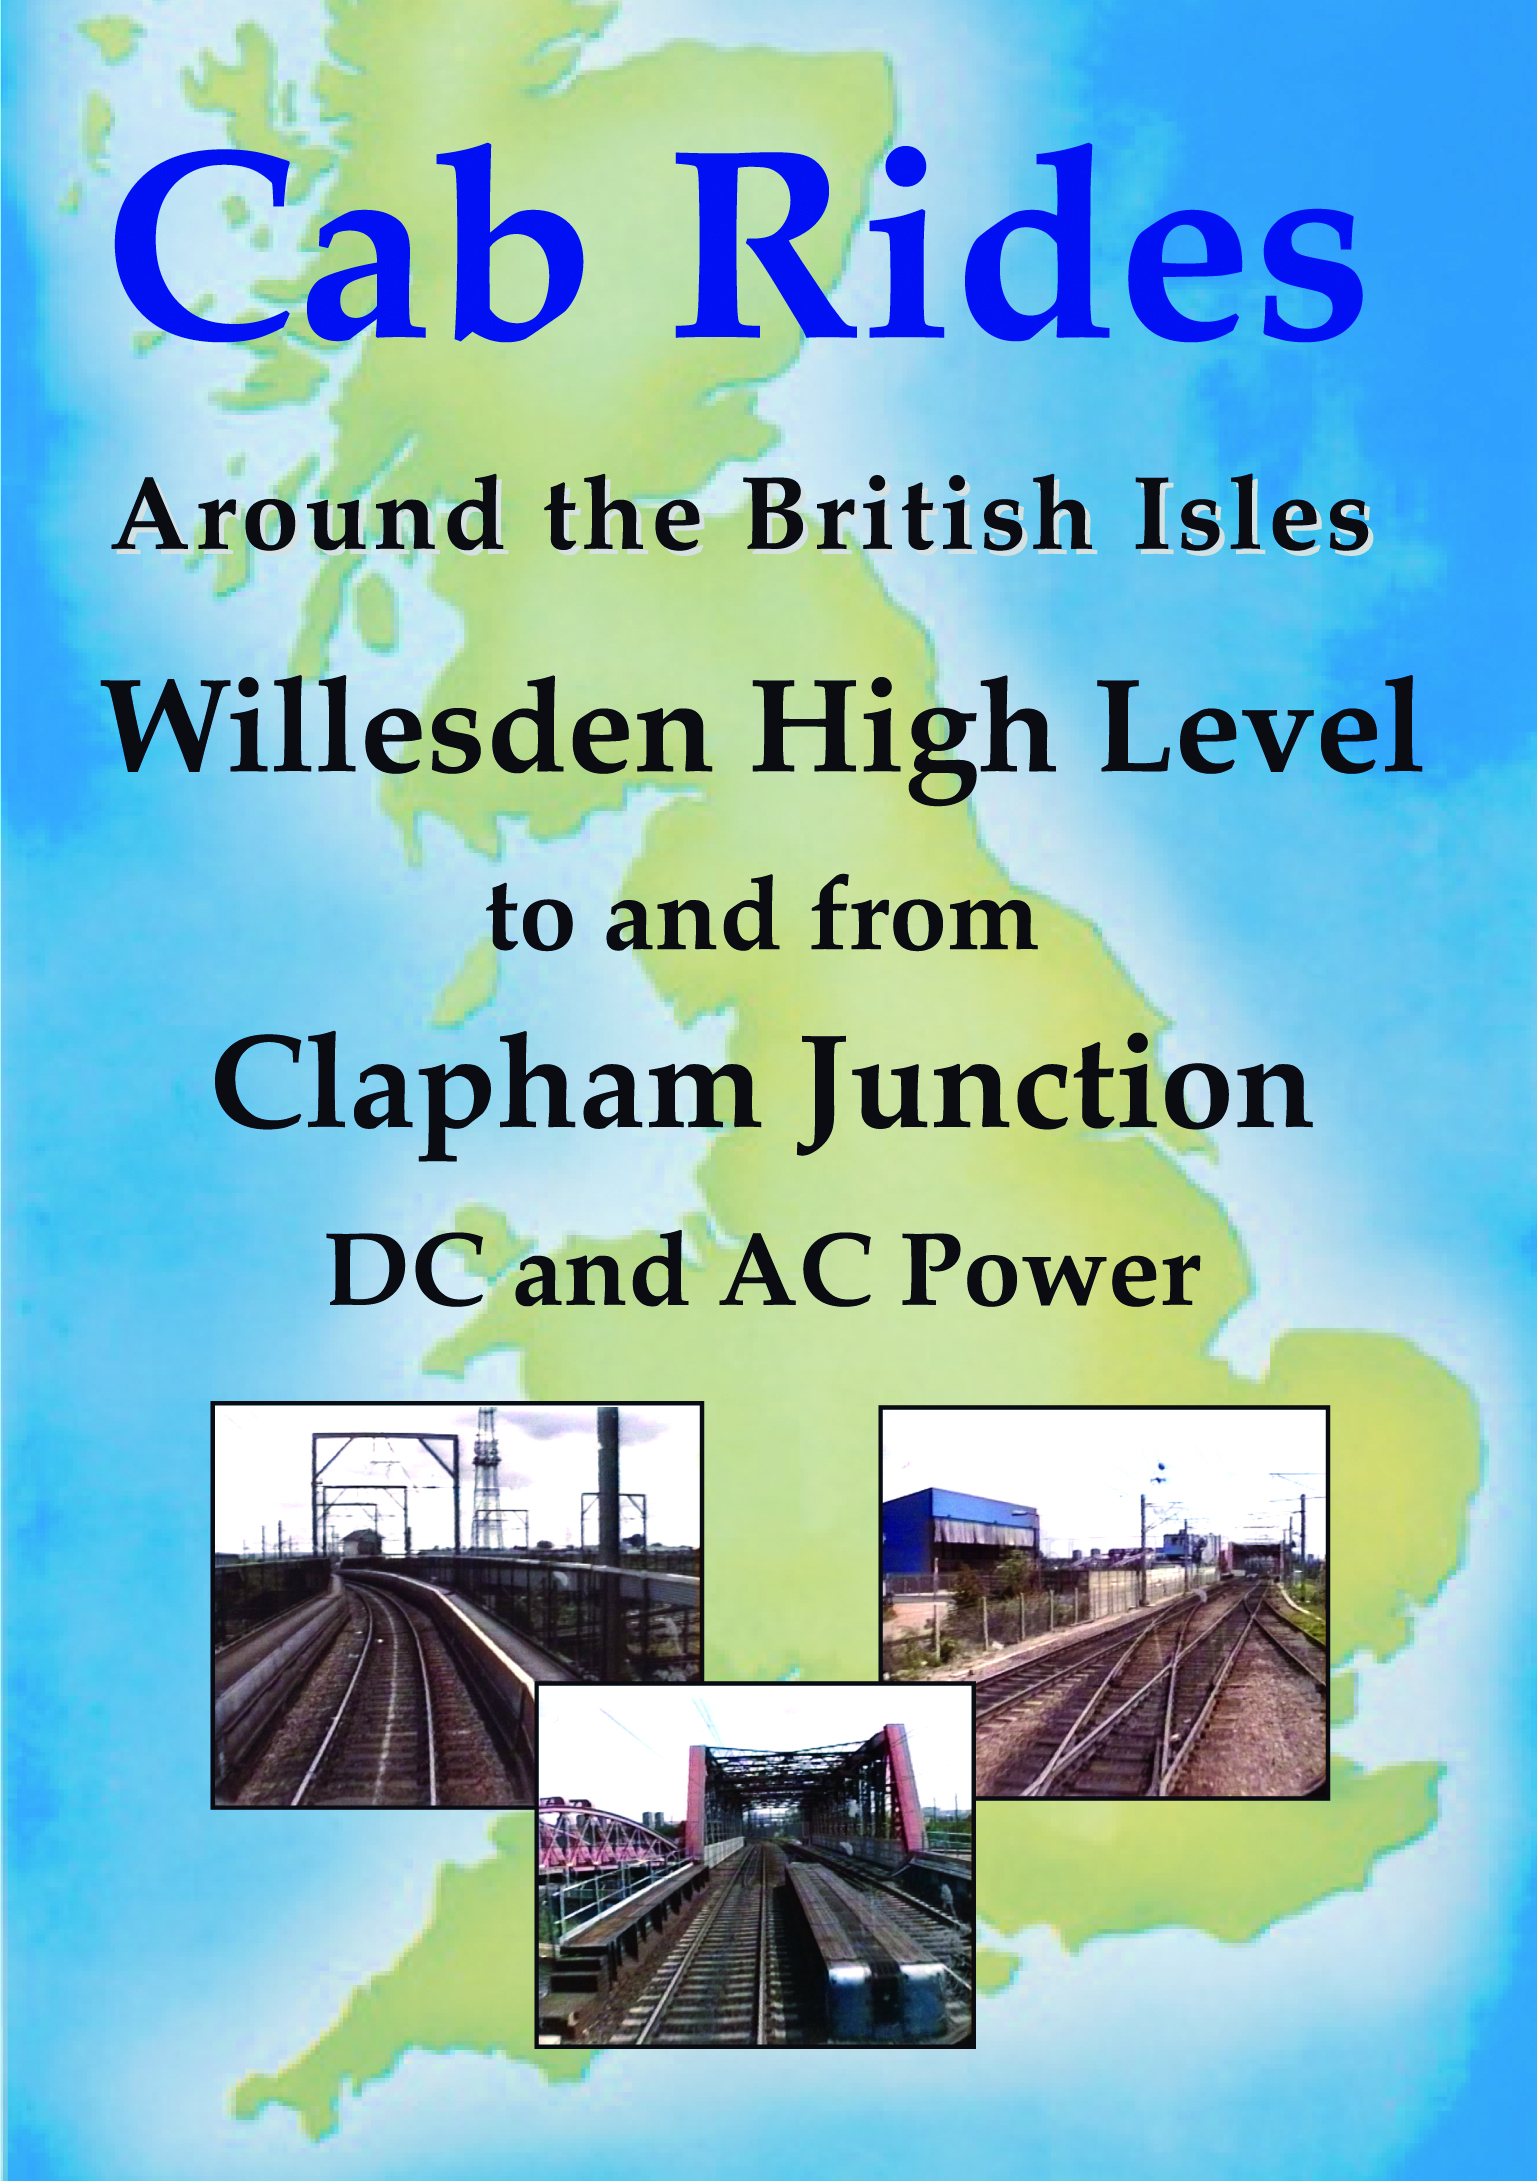 Cab Rides Around the British Isles: Willesden High Level to Clapham Junctions & Return